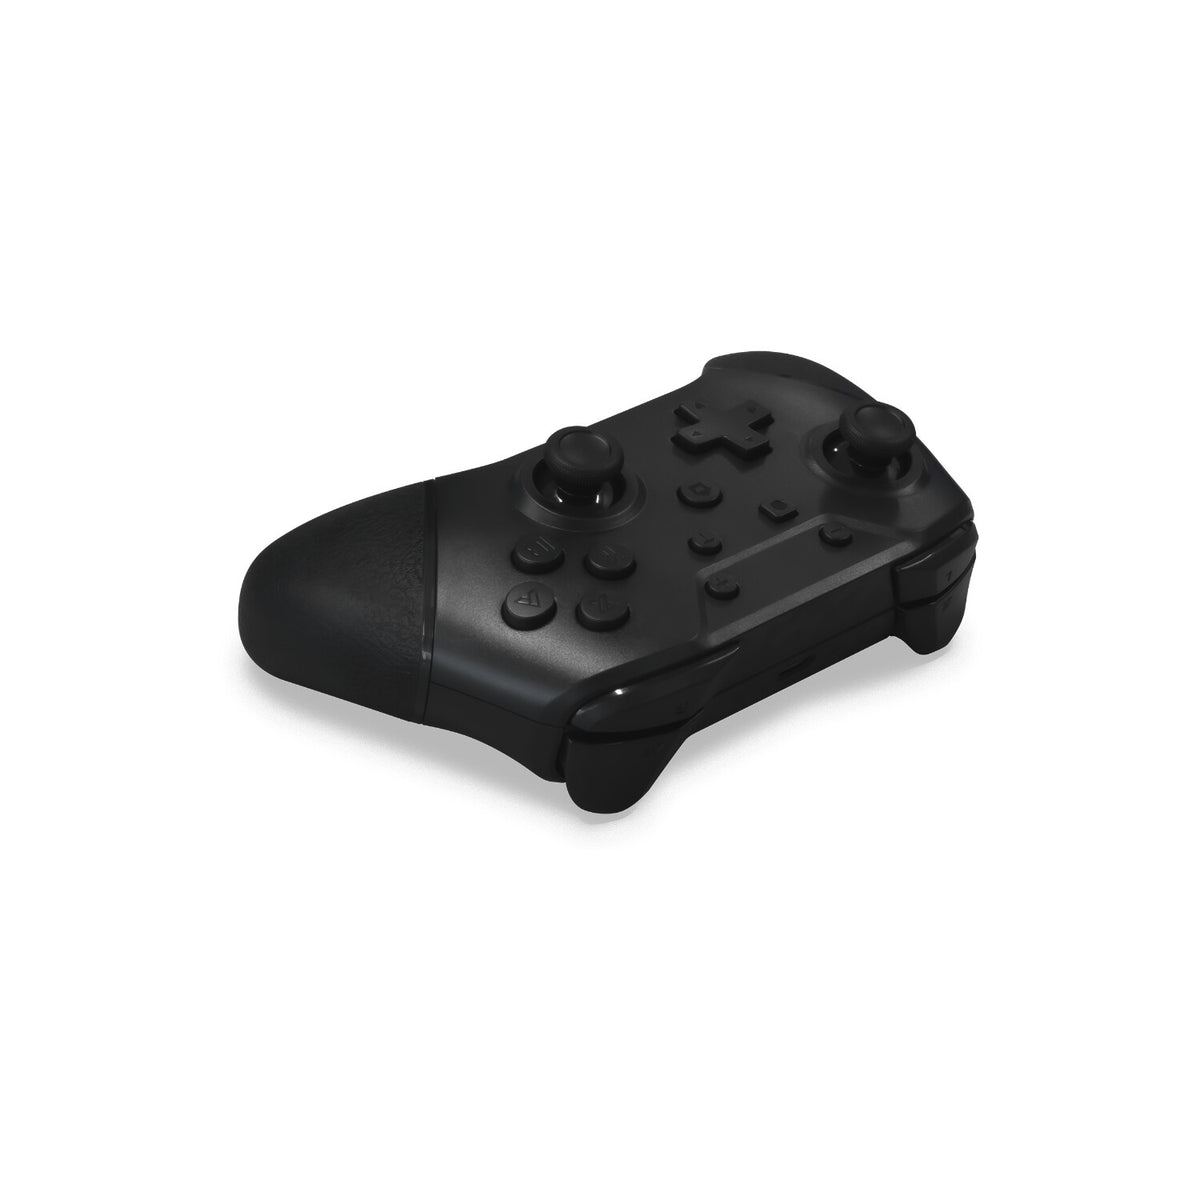 Hyperkin NuChamp - Wireless Gaming Controller for Nintendo Switch in Black